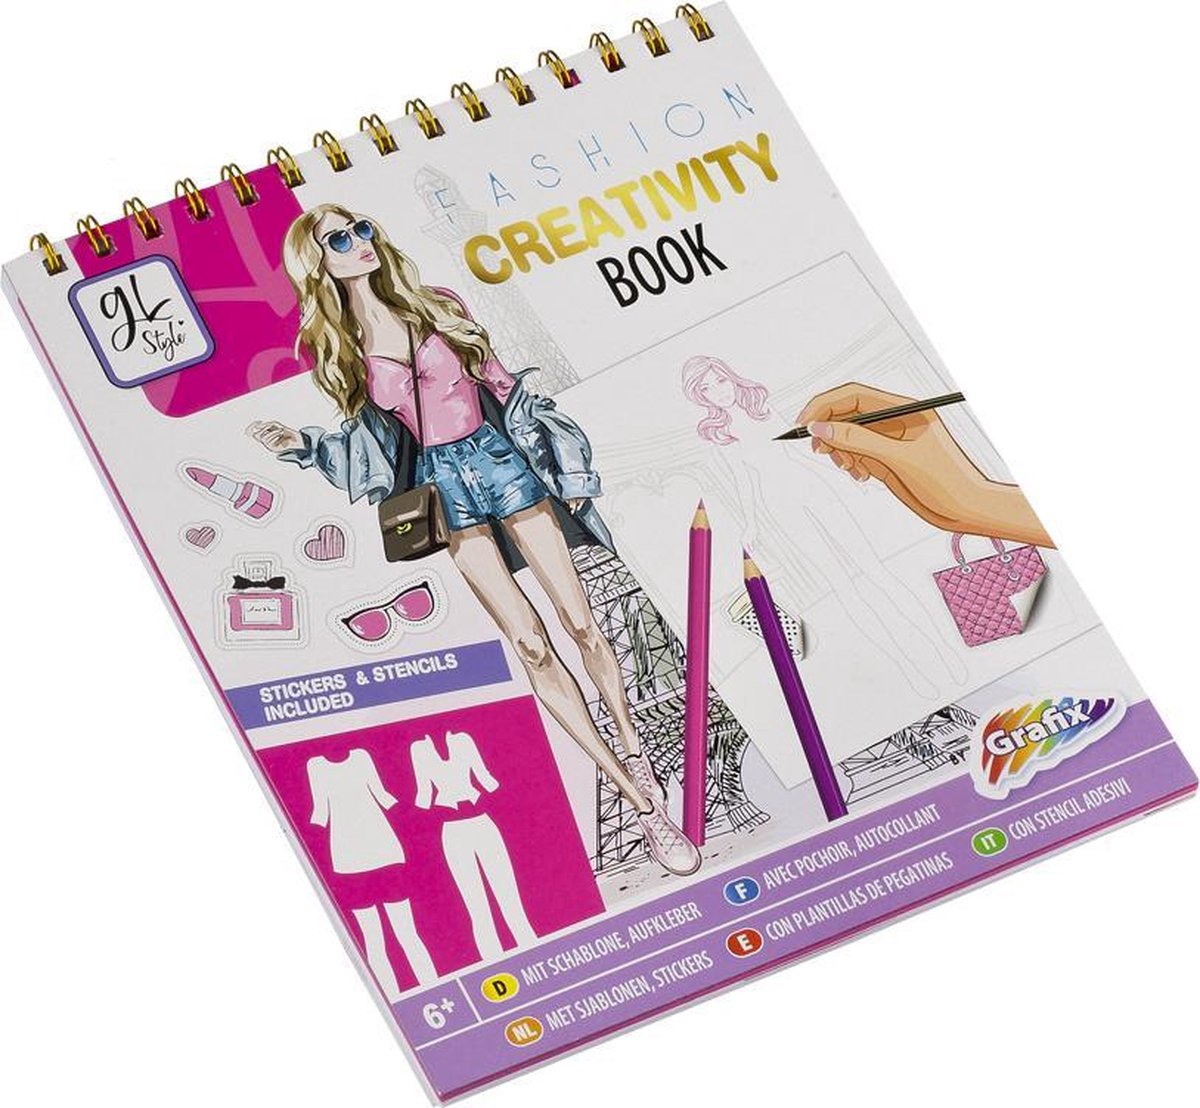 Afbeelding van product Grafix  Fashion Girls - Creativity book | Inclusief sjablonen en stickers